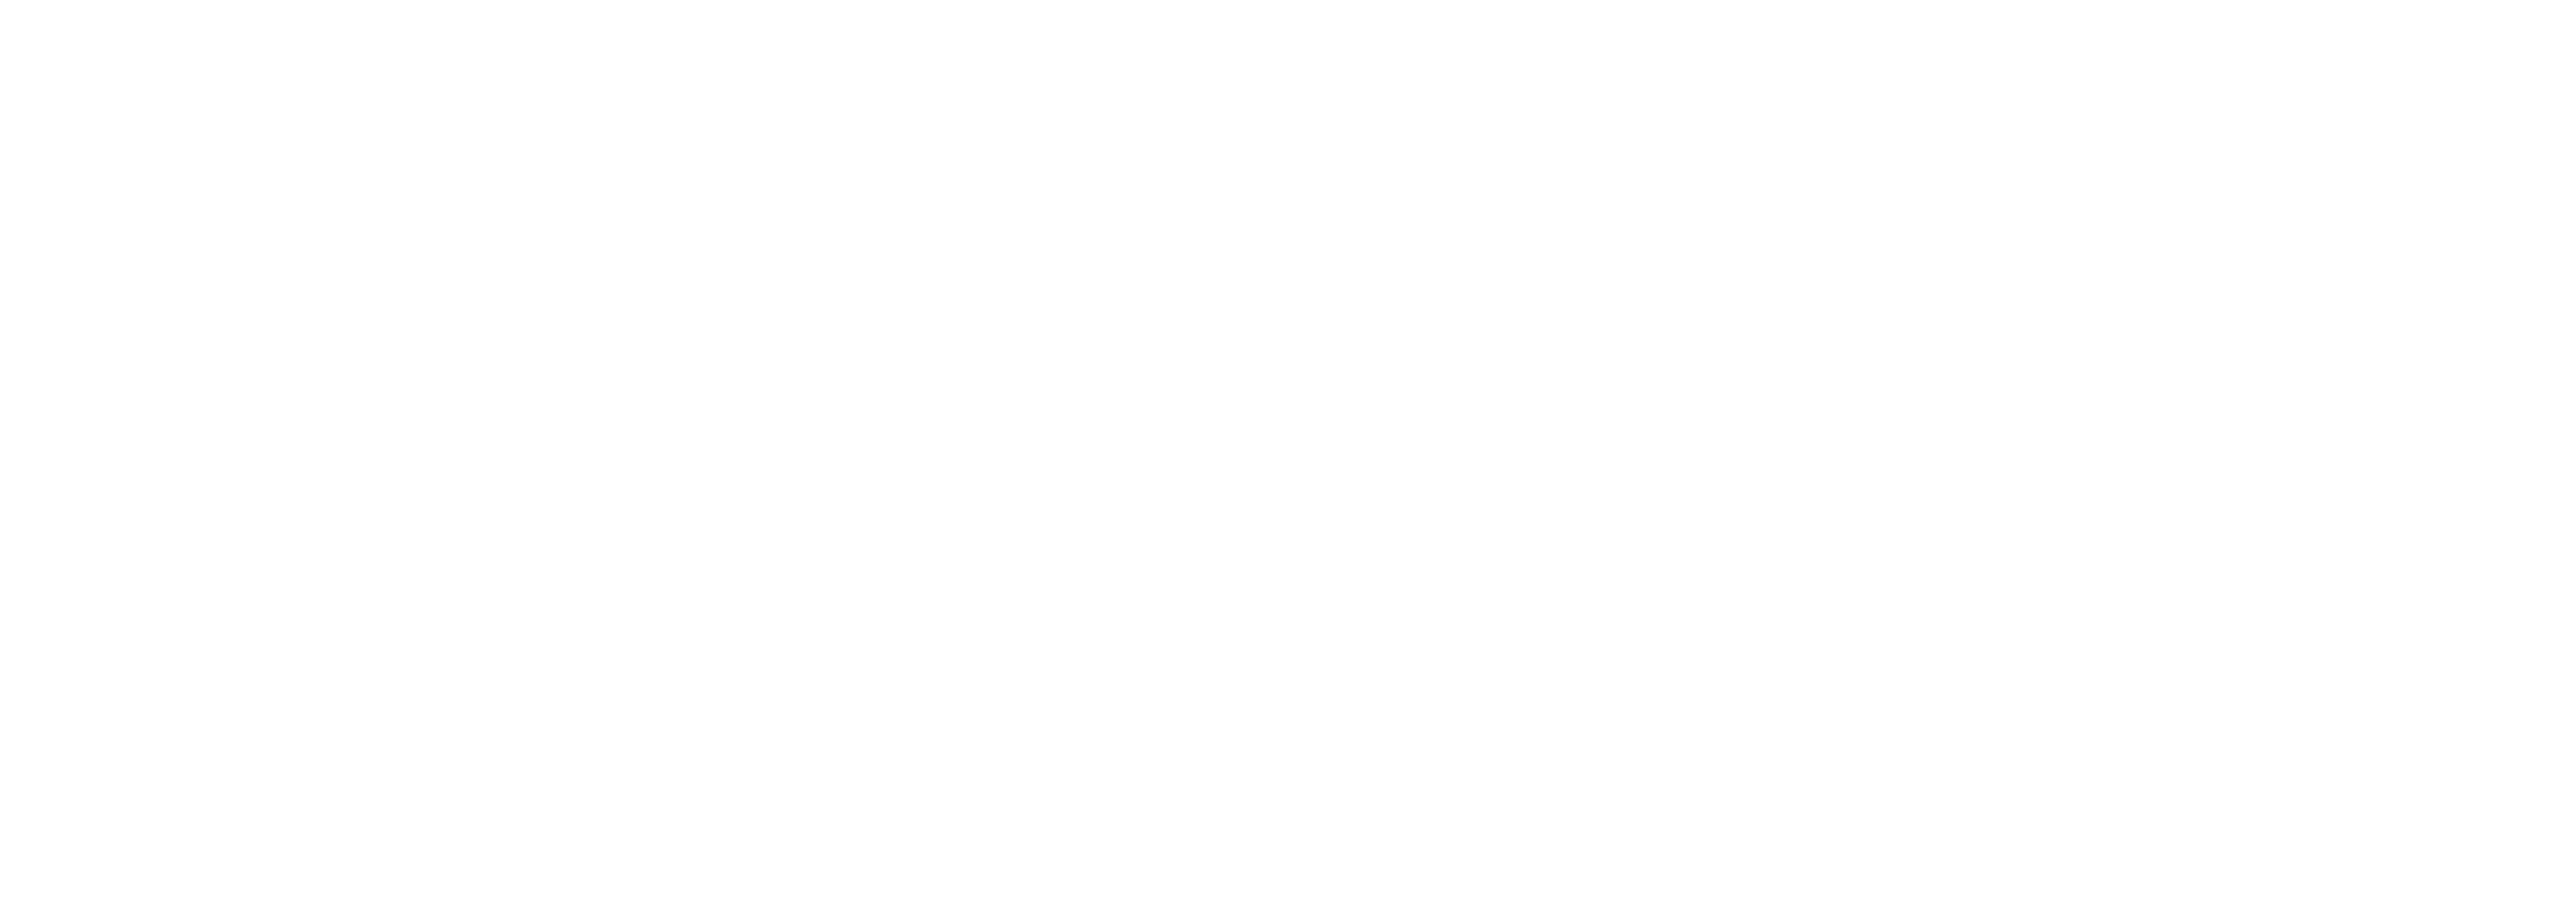 Cody Mehnert